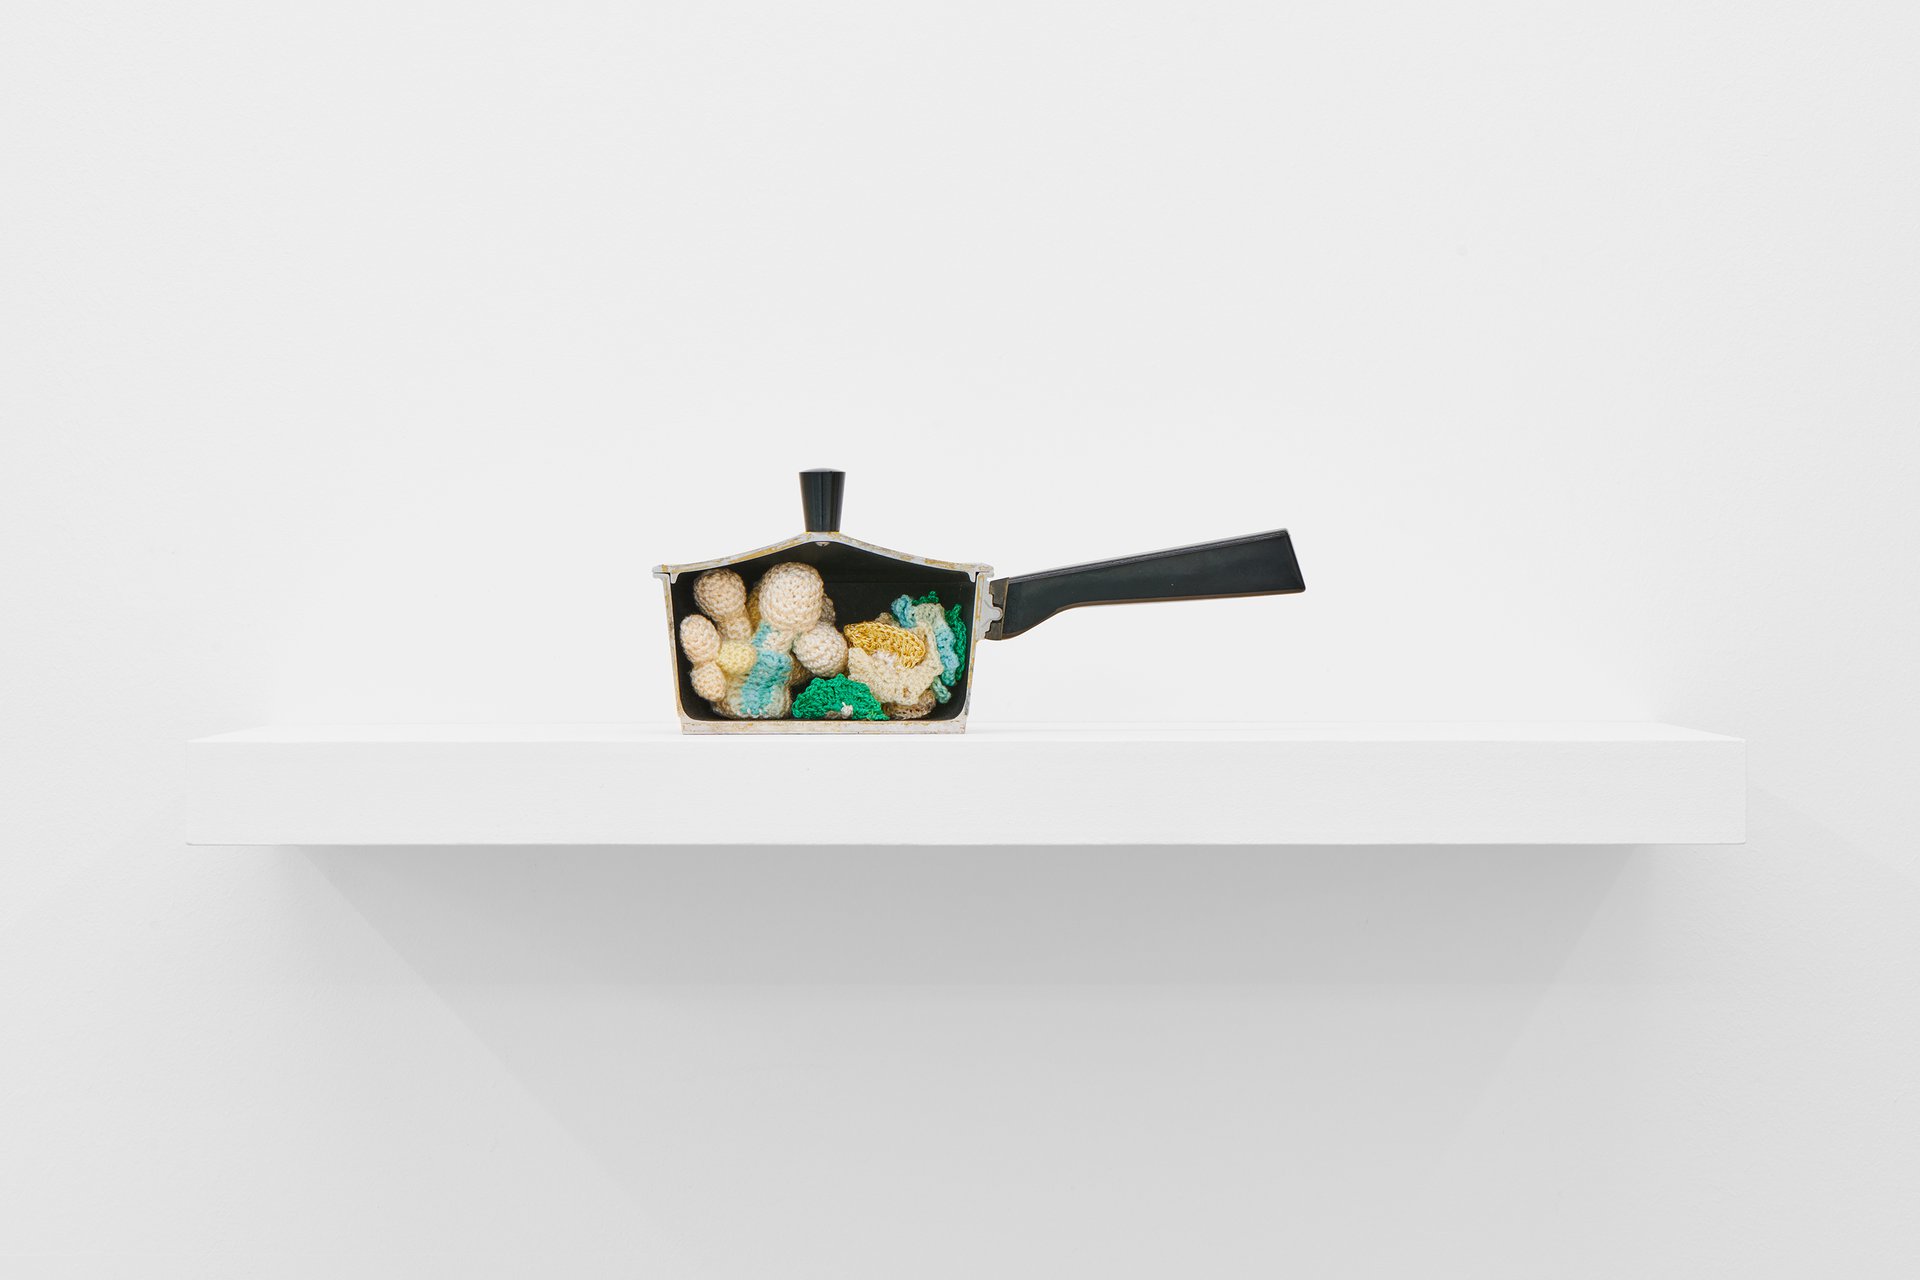 Su Richardson, Half Pan and Cauliflower, 1976, installation view, Bonner Kunstverein, 2022. Courtesy the artist and Richard Saltoun Gallery, London and Rome. Photo: Mareike Tocha.